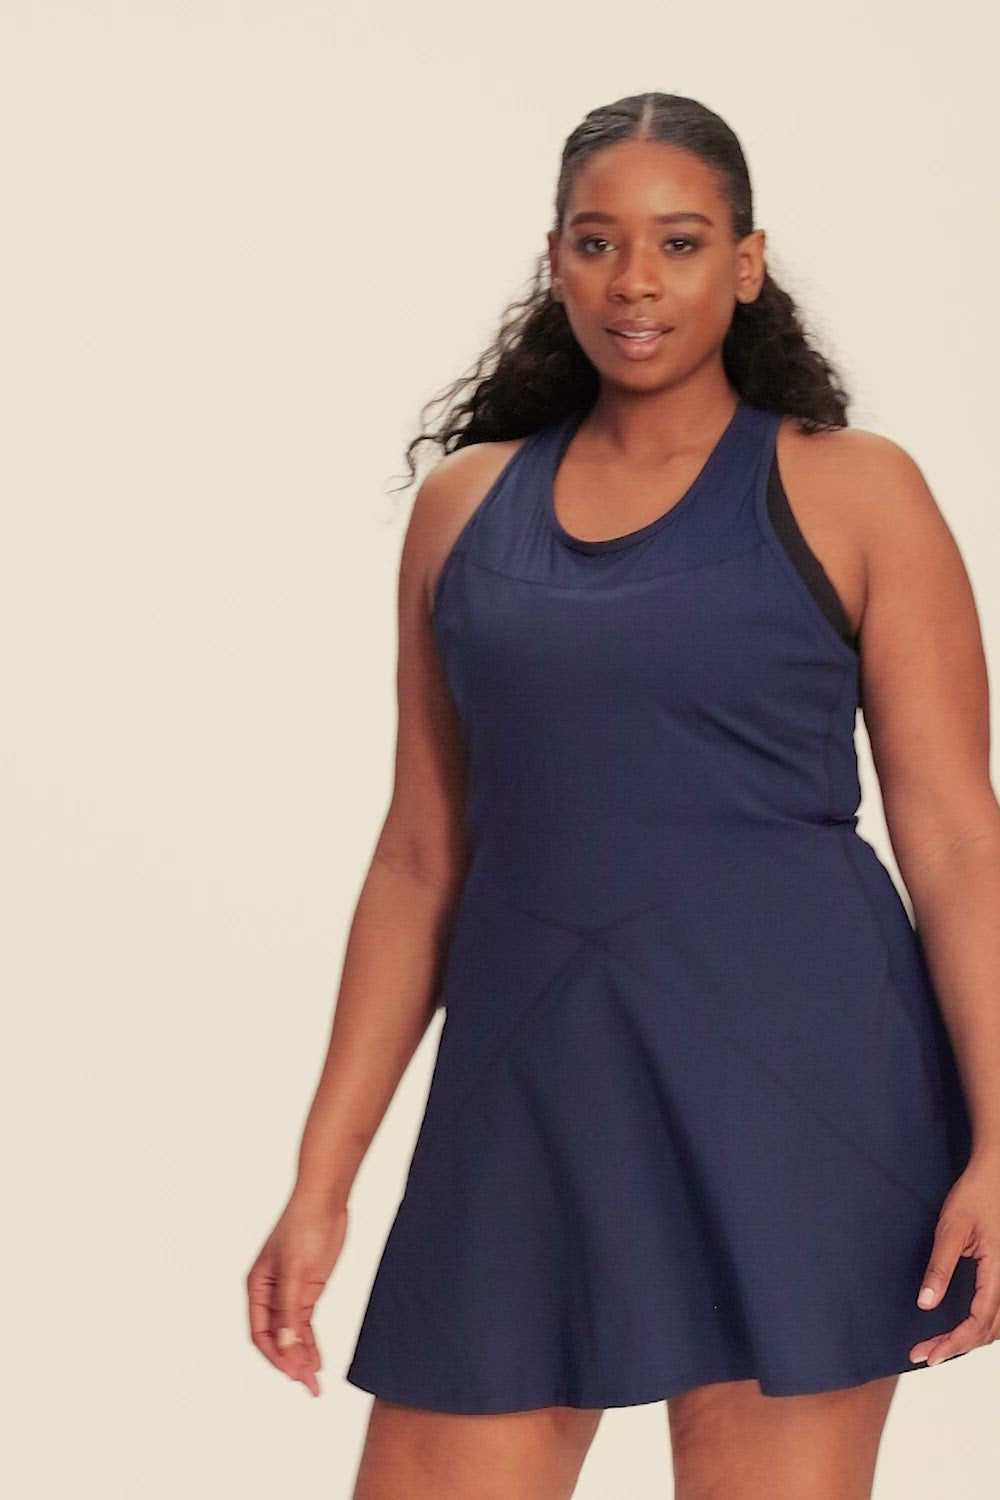 Sleek Back Bodysuit - Ivory  Tennis dress, Clothes for women, Back women